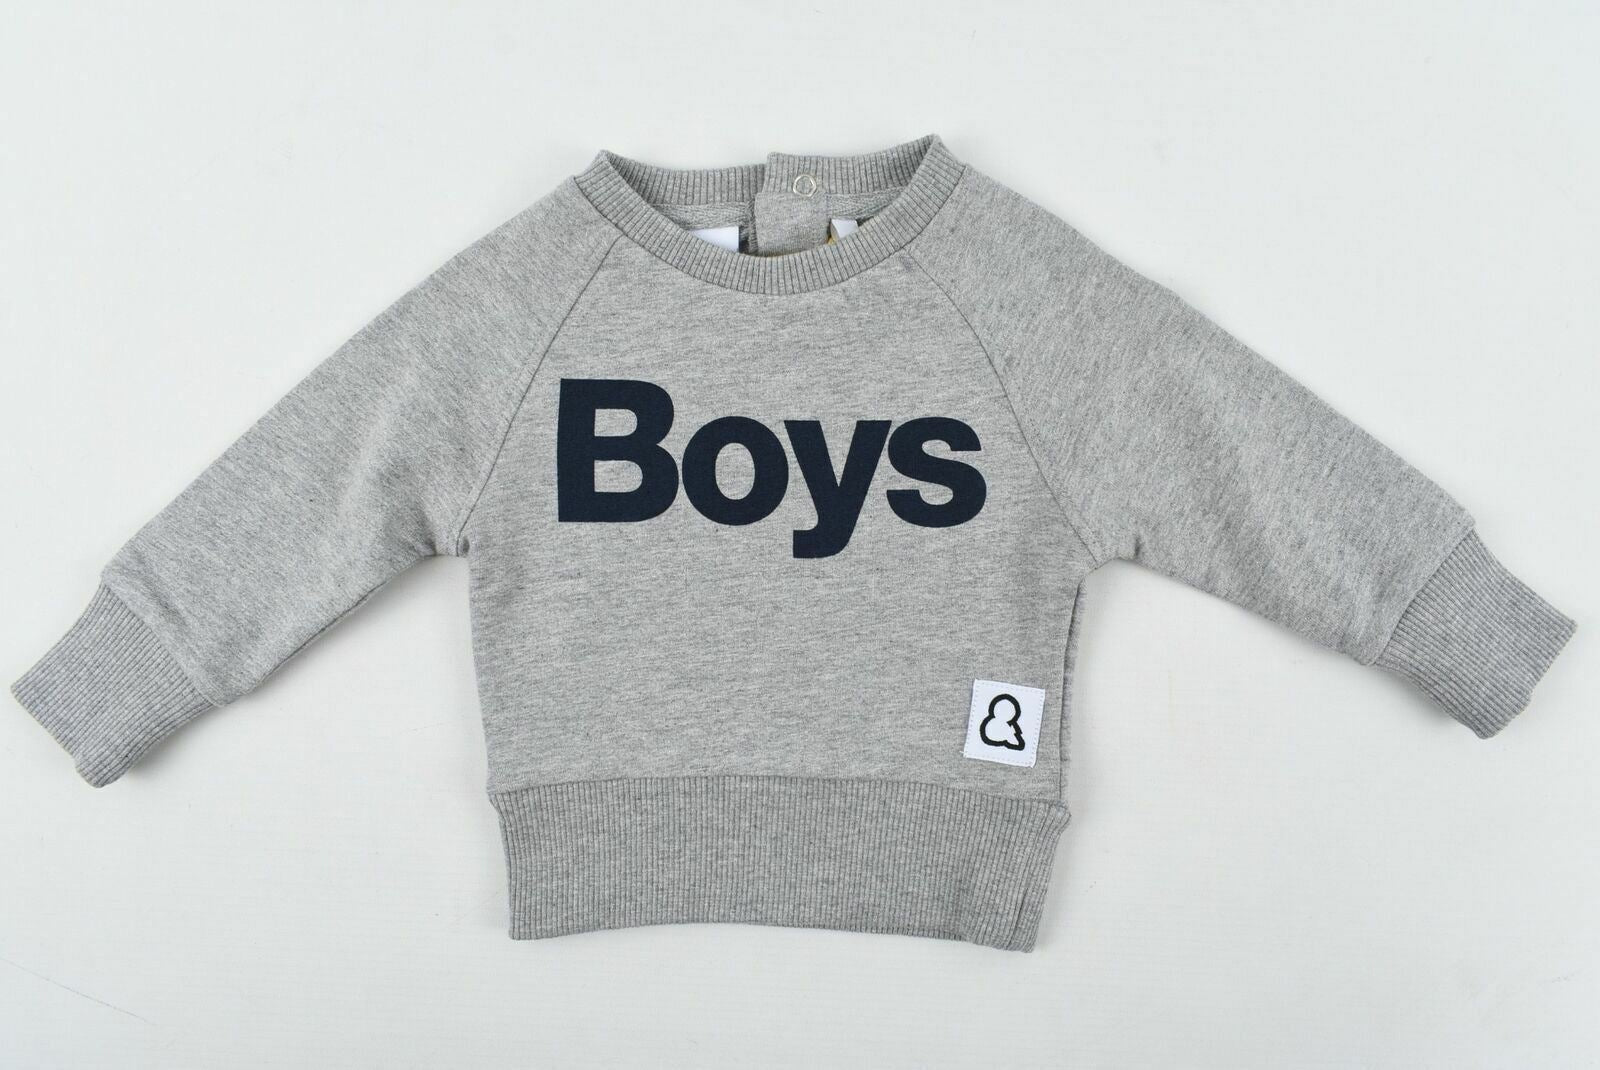 'BOYS & GIRLS' Boys Crew Neck Long Sleeved Jumper- Age 3-6 Months